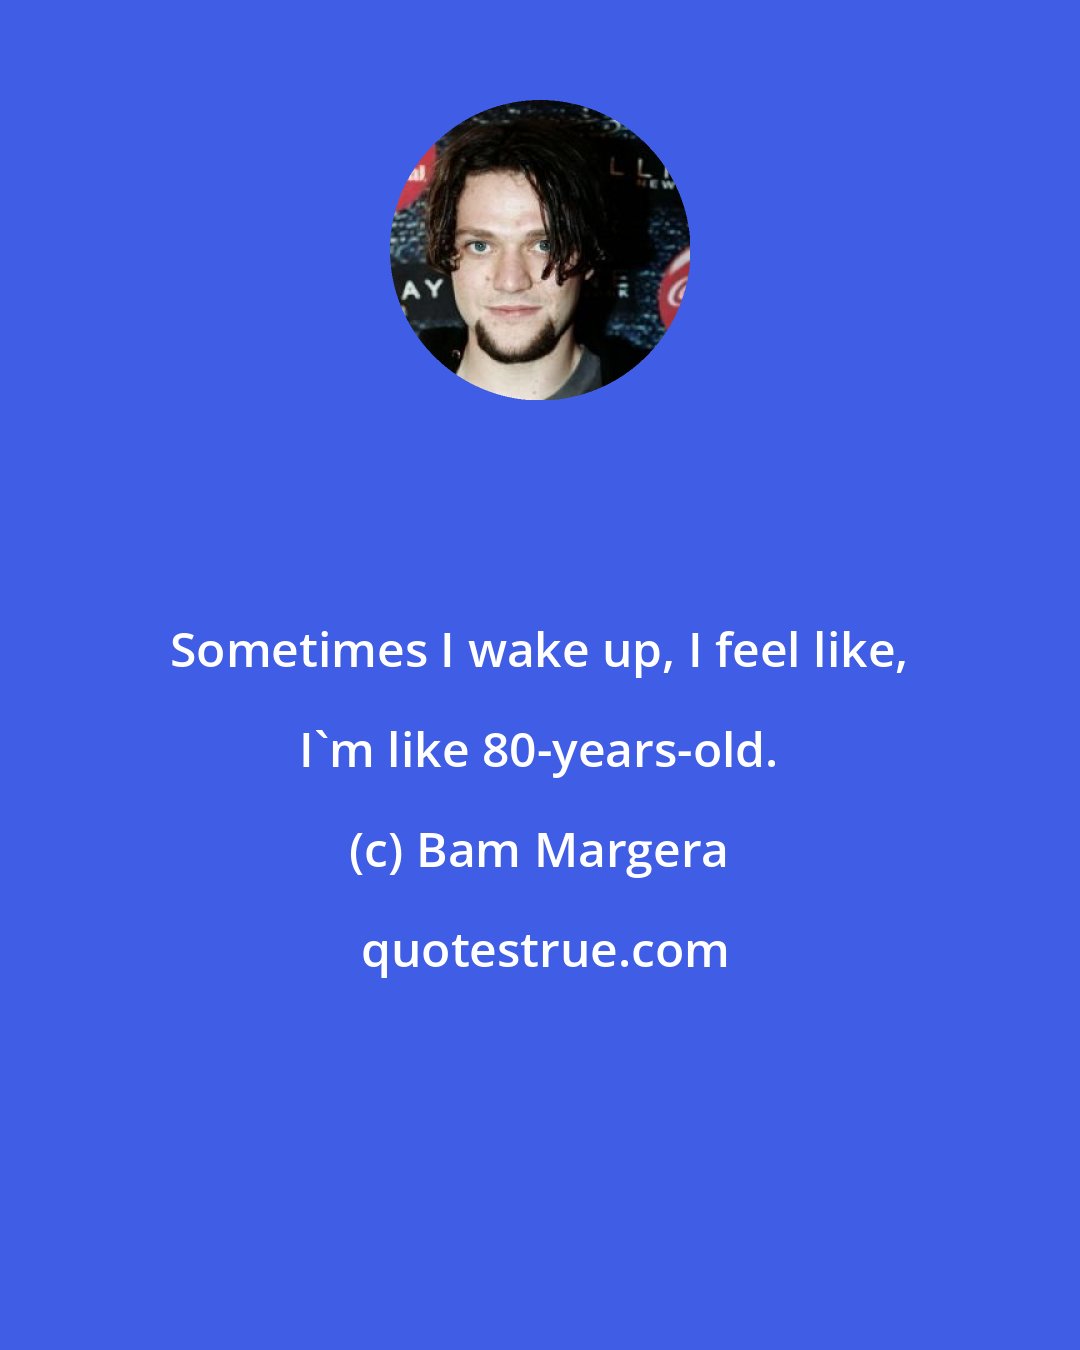 Bam Margera: Sometimes I wake up, I feel like, I'm like 80-years-old.